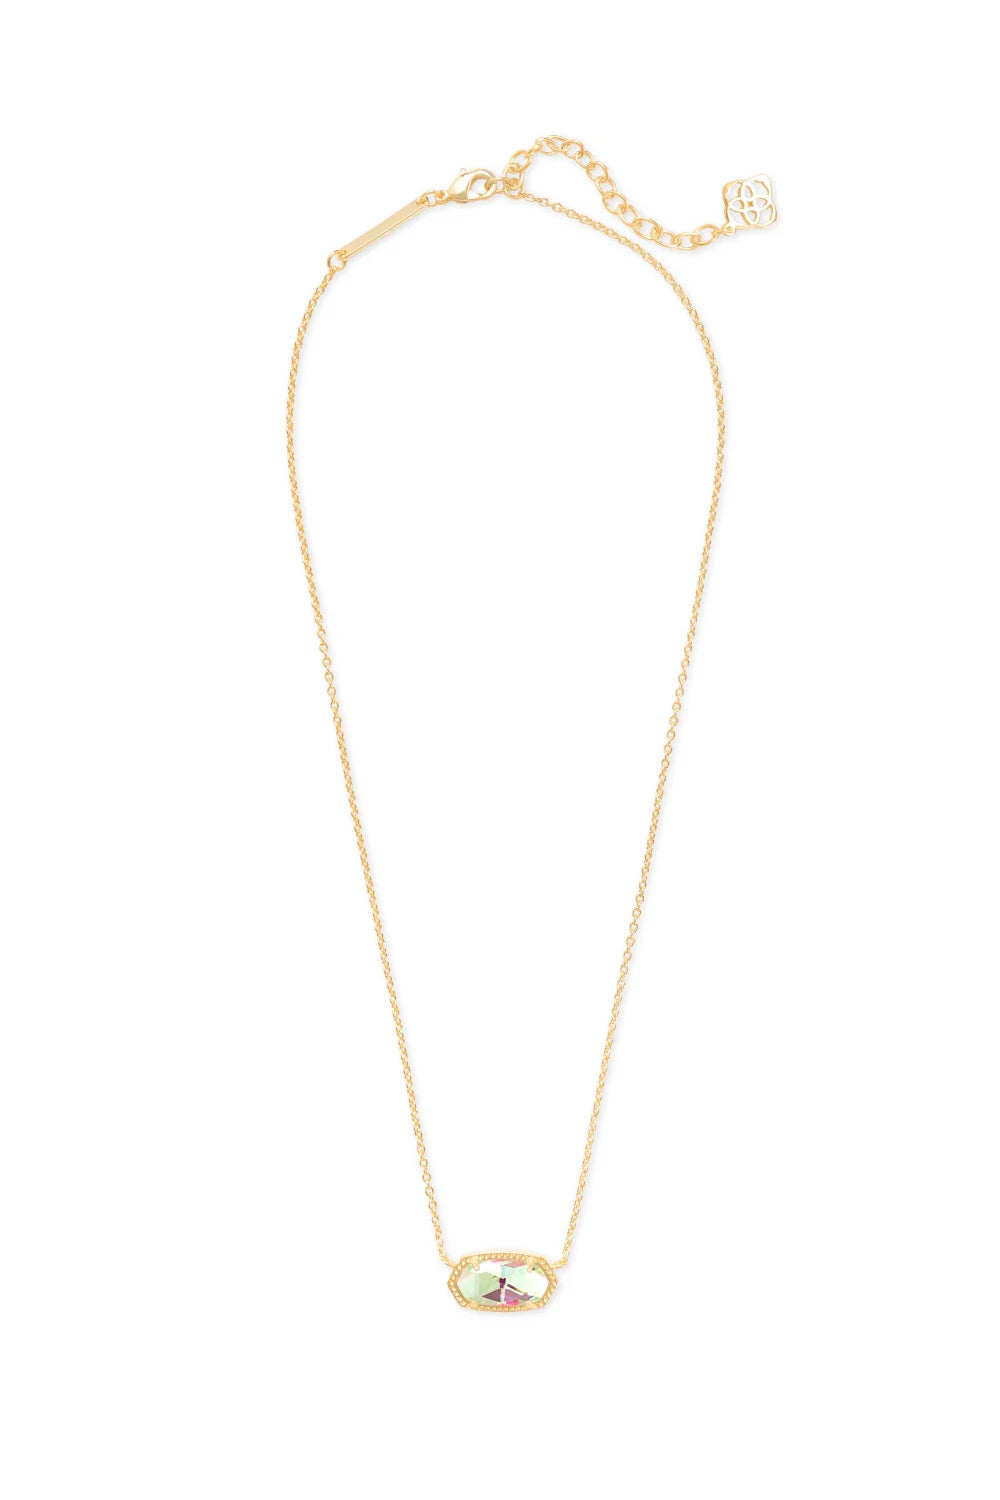 Kendra Scott: Elisa Gold Pendant Necklace - Dichroic Glass | Makk Fashions